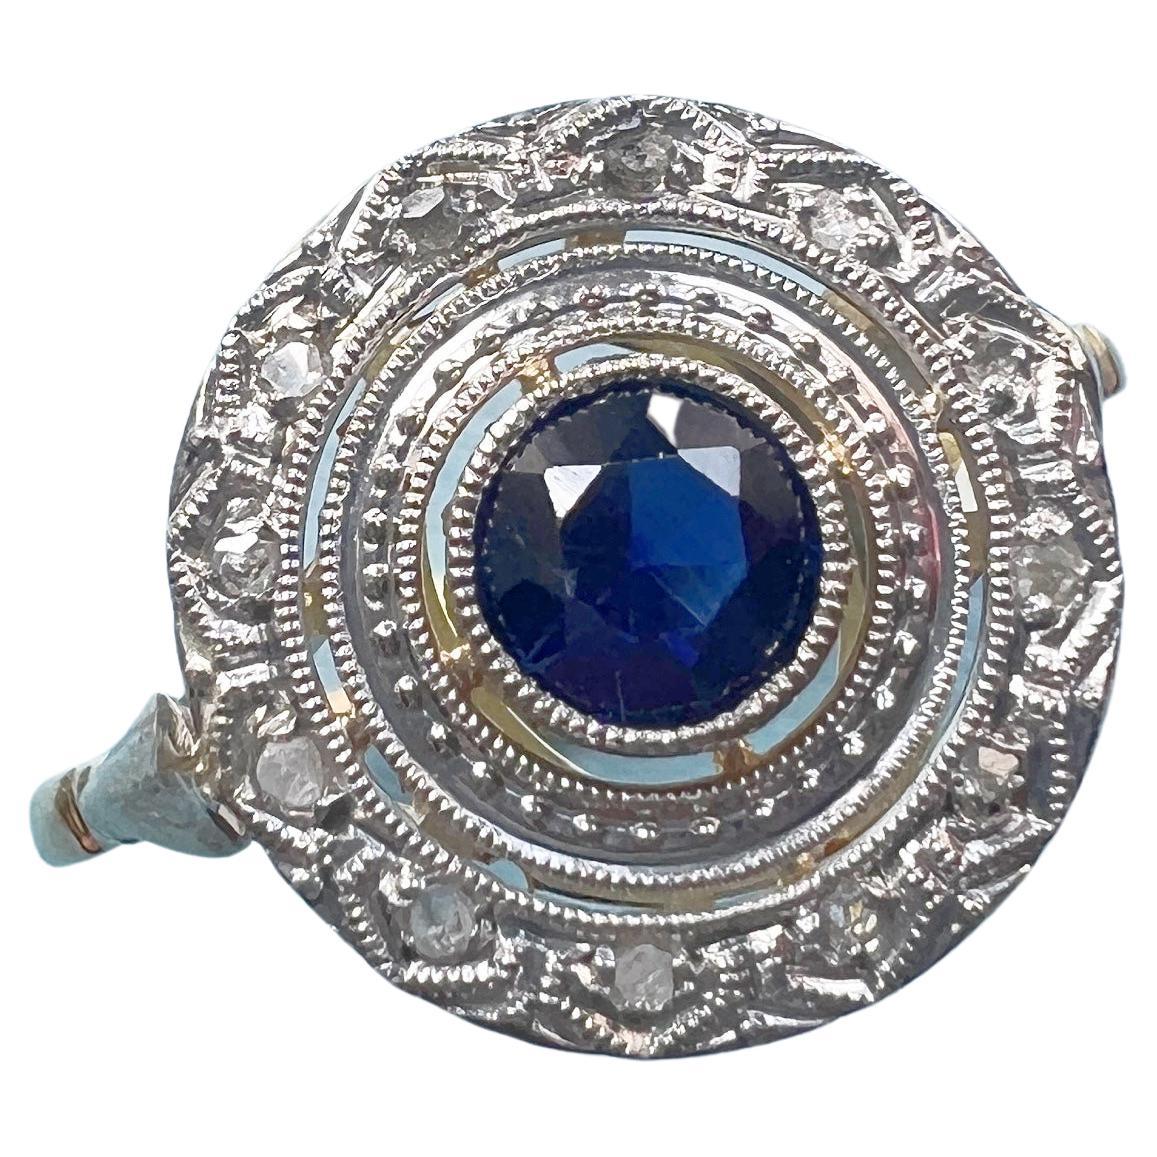 Antique Art Deco era 18K gold diamond blue sapphire ring For Sale